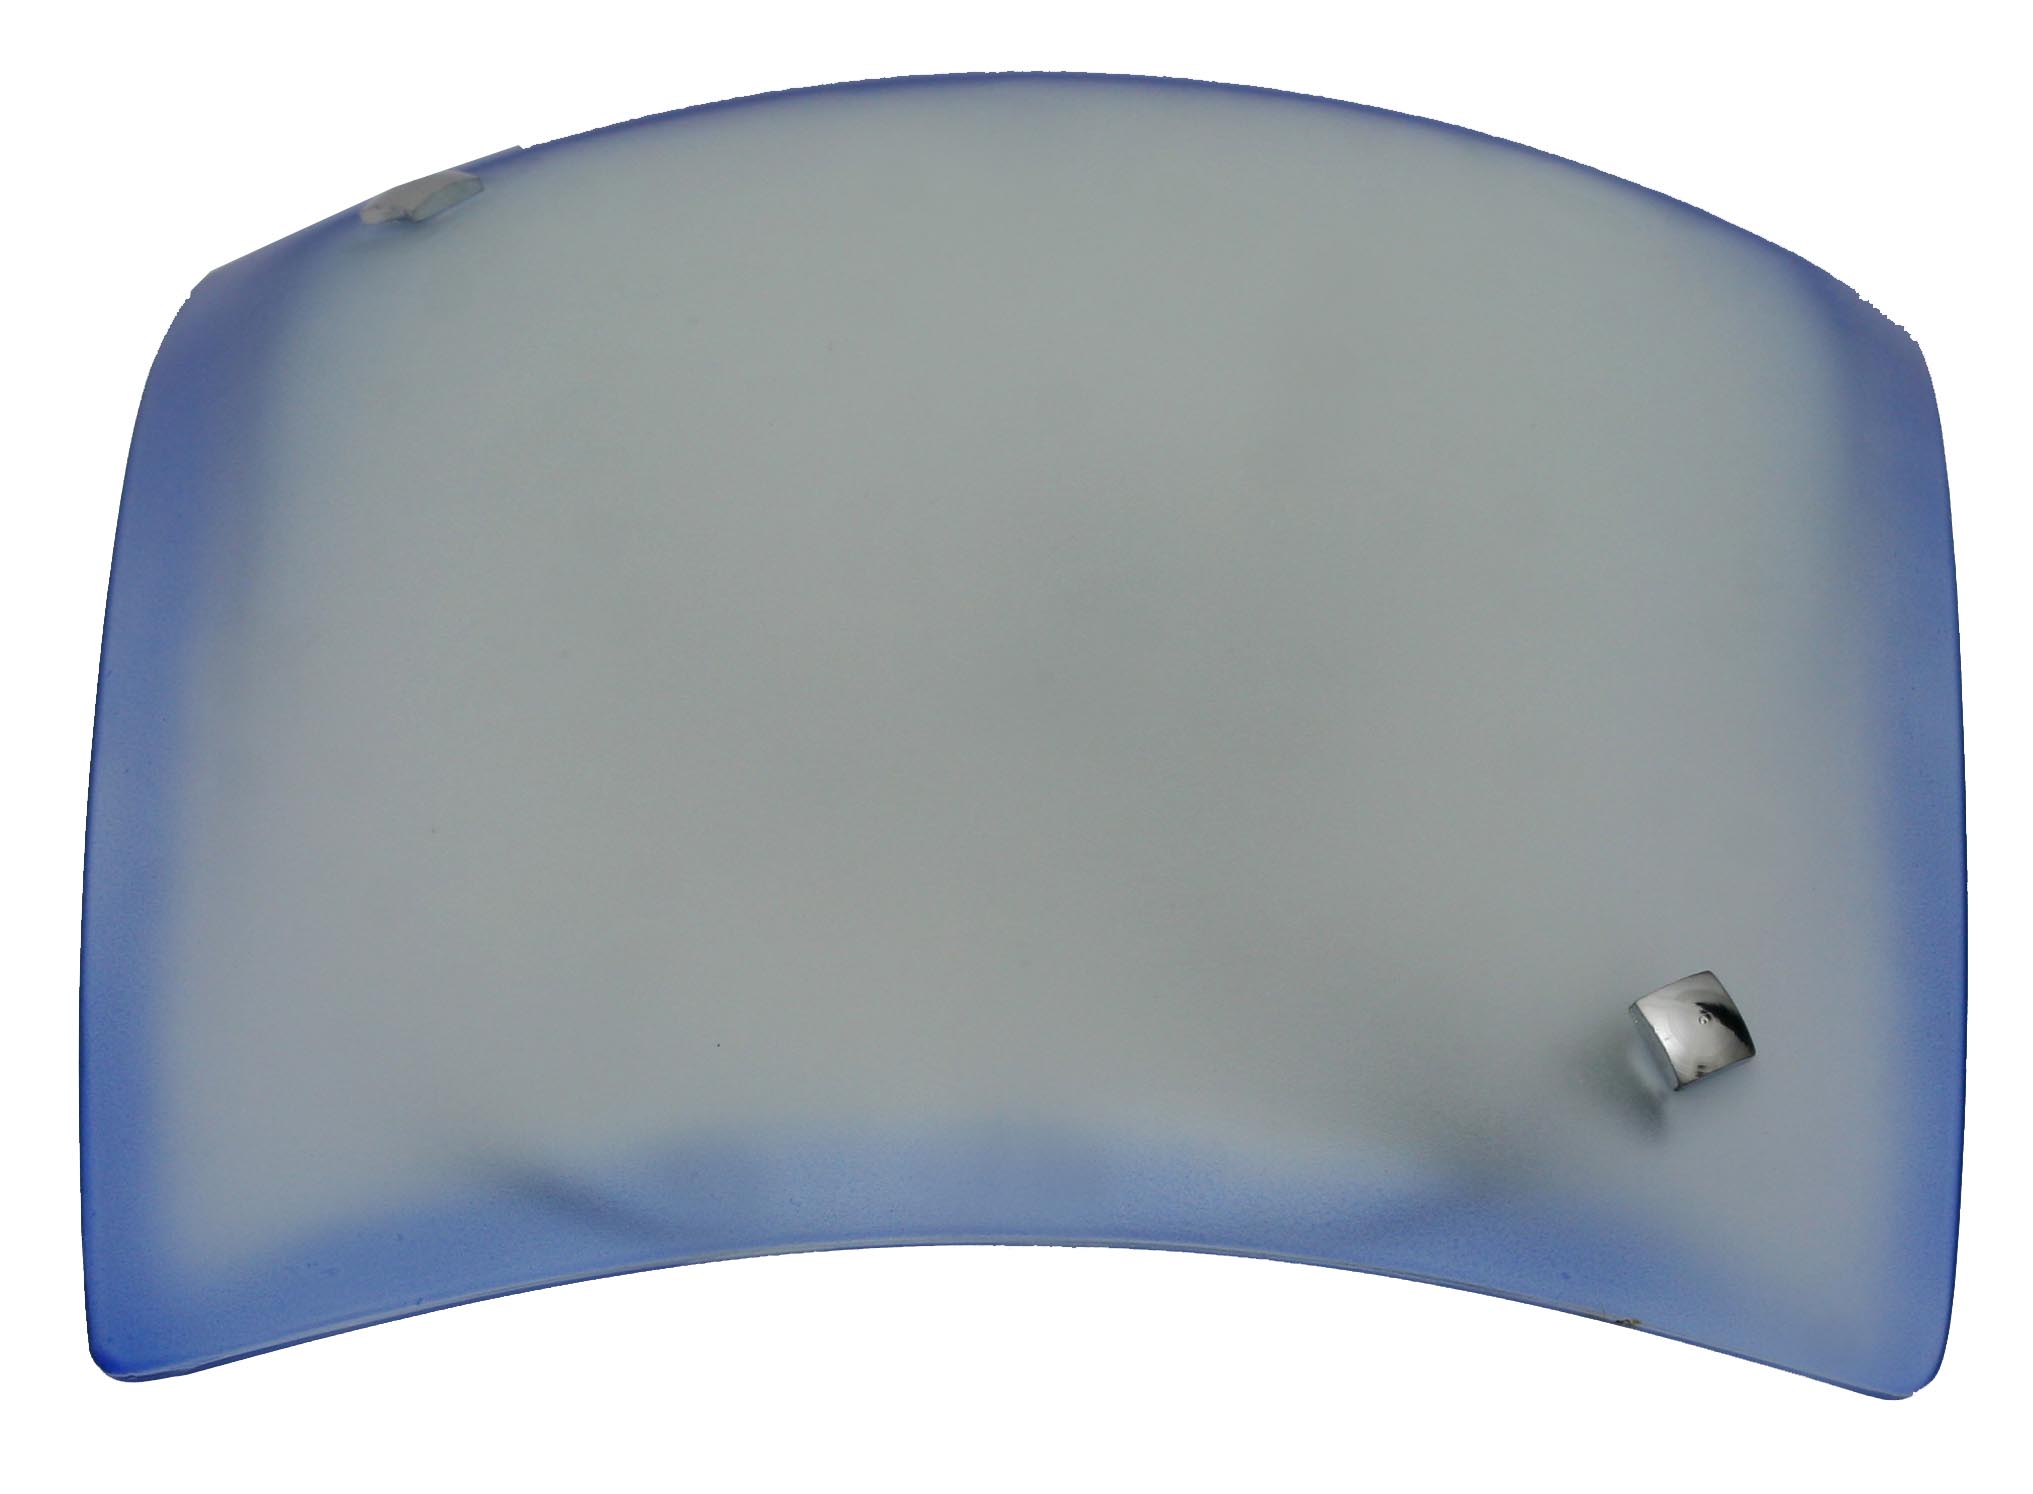 Plafon Charme Quadrado 2 Furos Vidro de 250mm Fosco Com Borda Azul